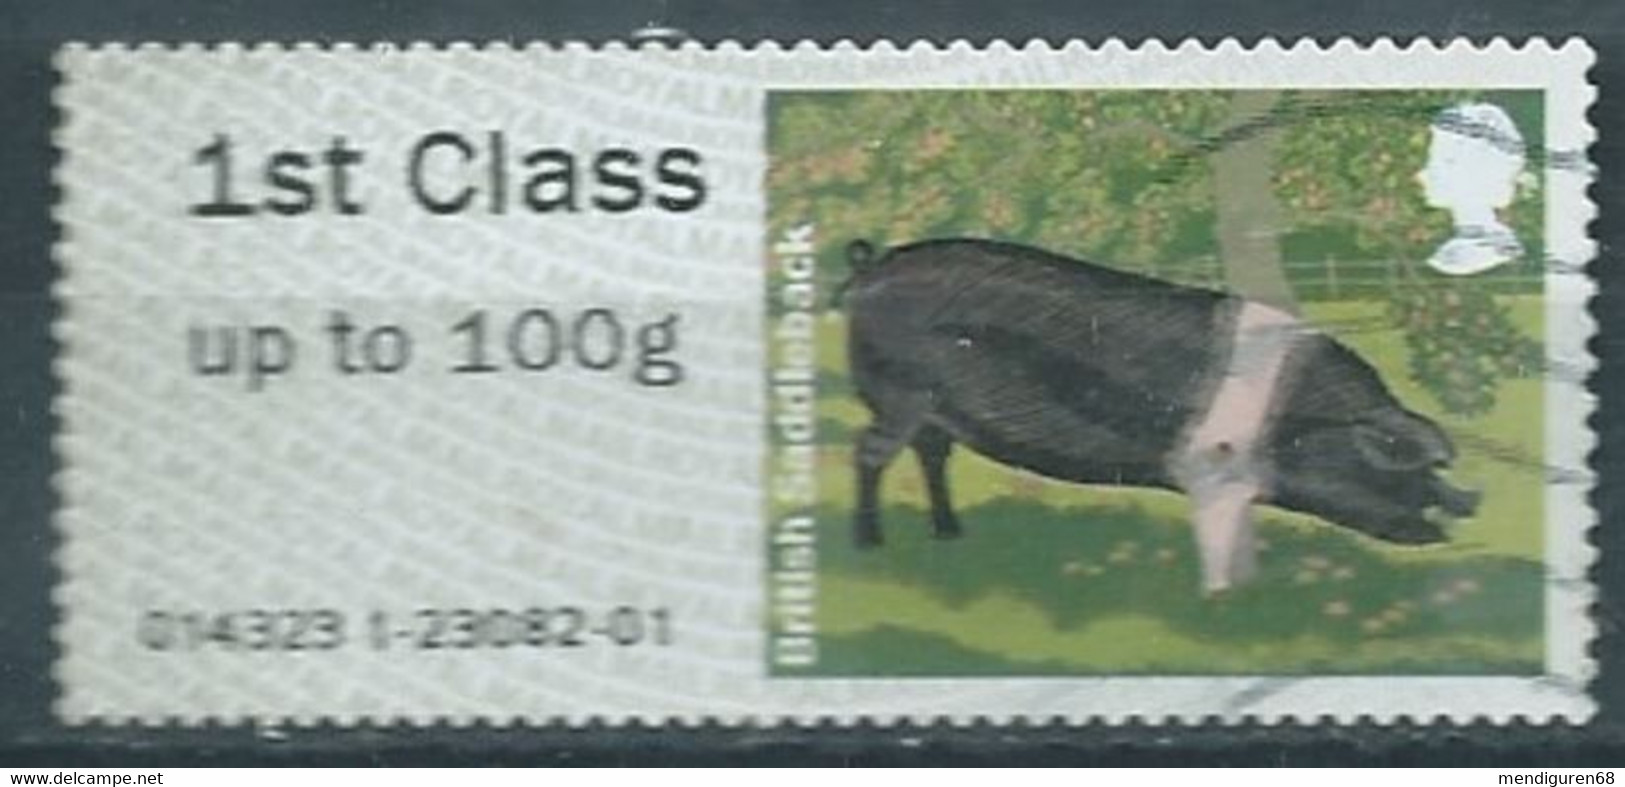 GROSBRITANNIEN GRANDE BRETAGNE GB 2012 POST&GO PIGS: SADDLEBACK 1st CLASS Up To 100g USED SG FS38 MI ATM38 YT TD38 - Post & Go Stamps